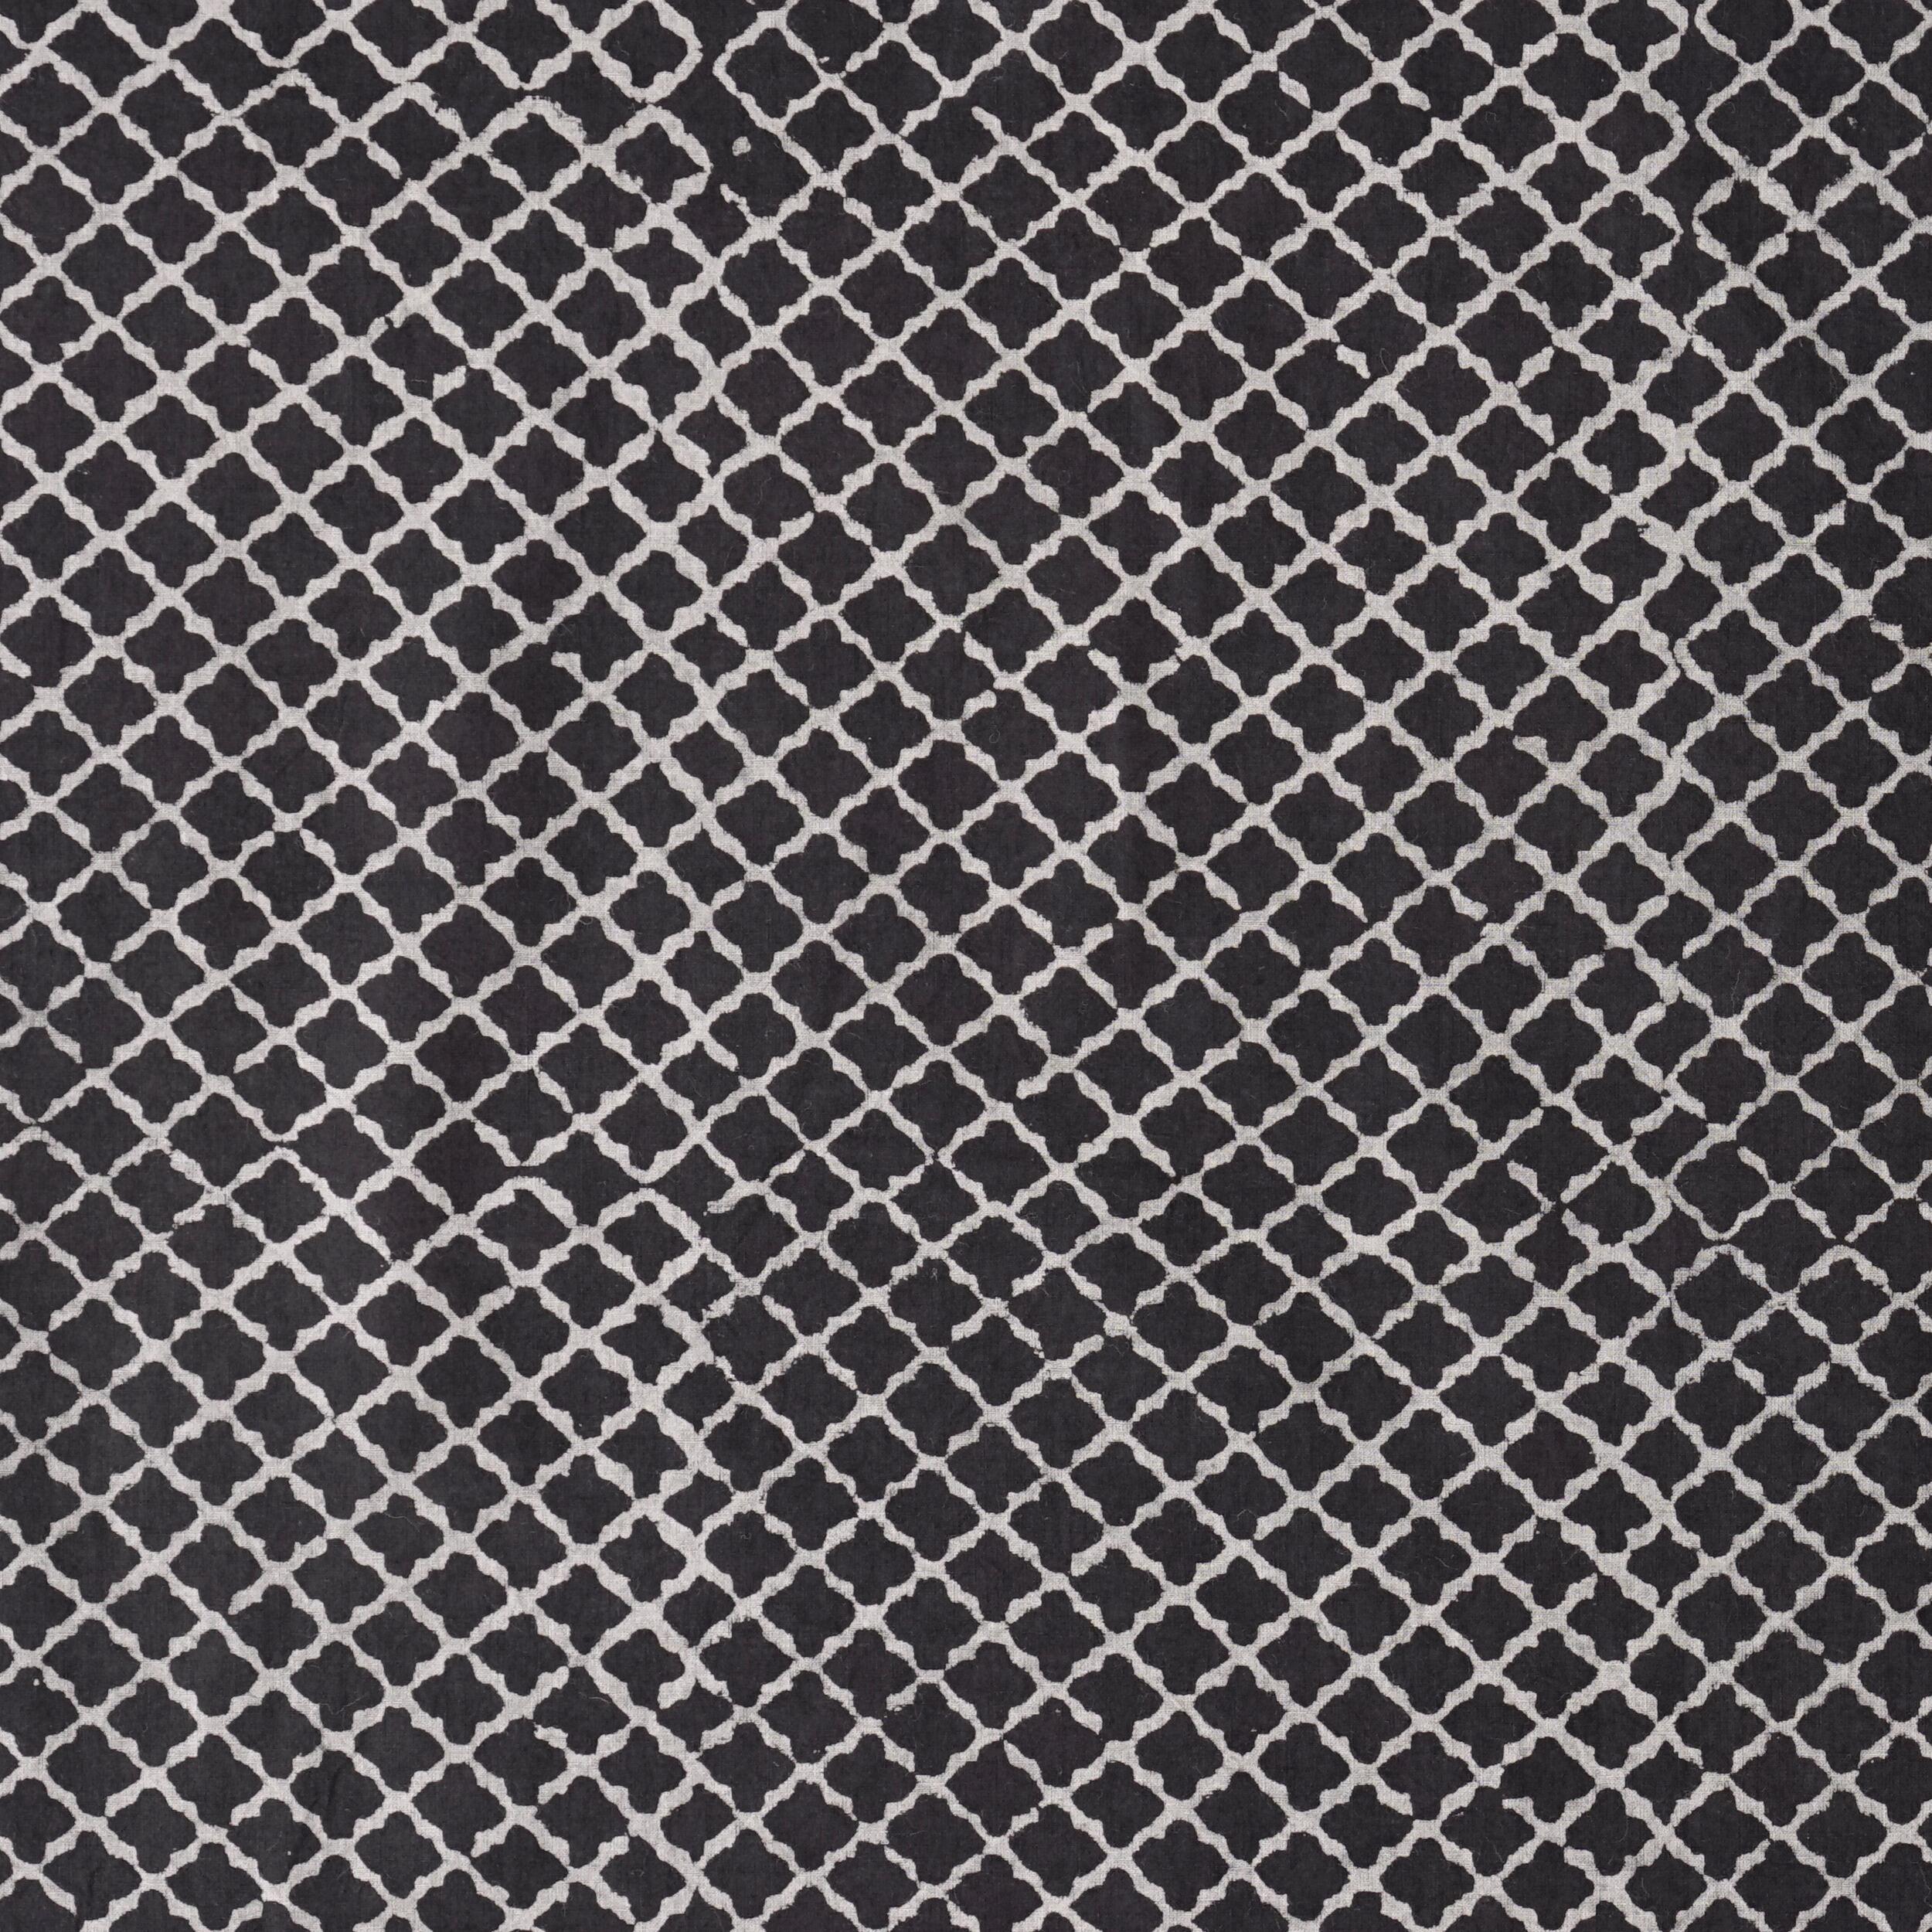 Block Printed Fabric, 100% Cotton, Ajrak Design: Iron Black Base, White Clover. Flat